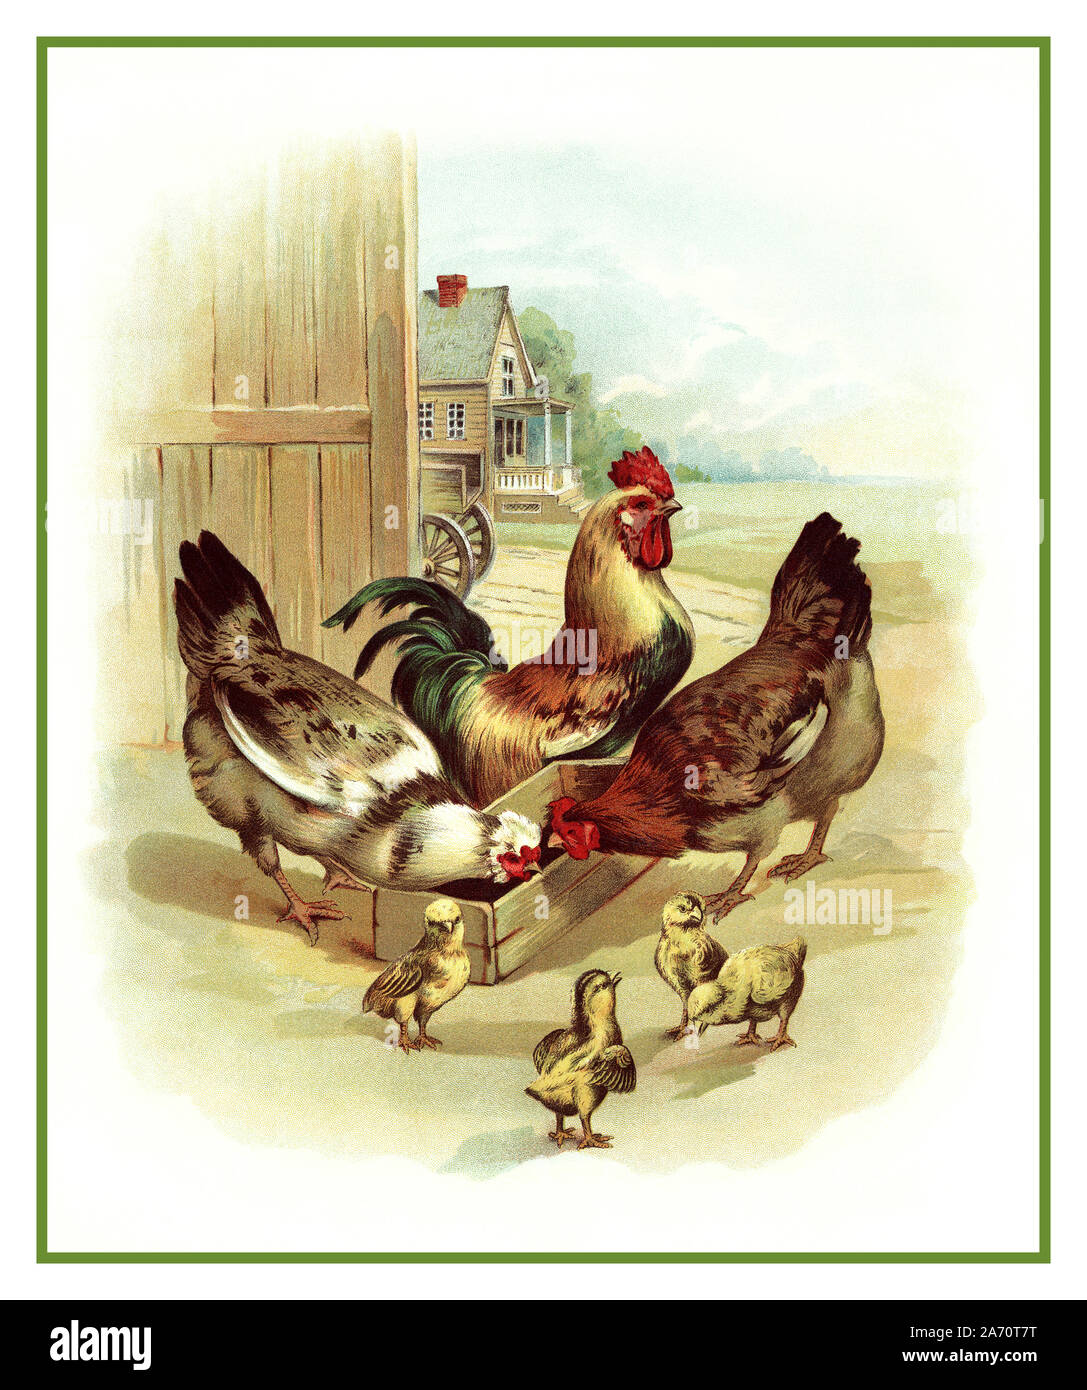 Wild Feather Farm Floral Chicken Egg Carton Stamp